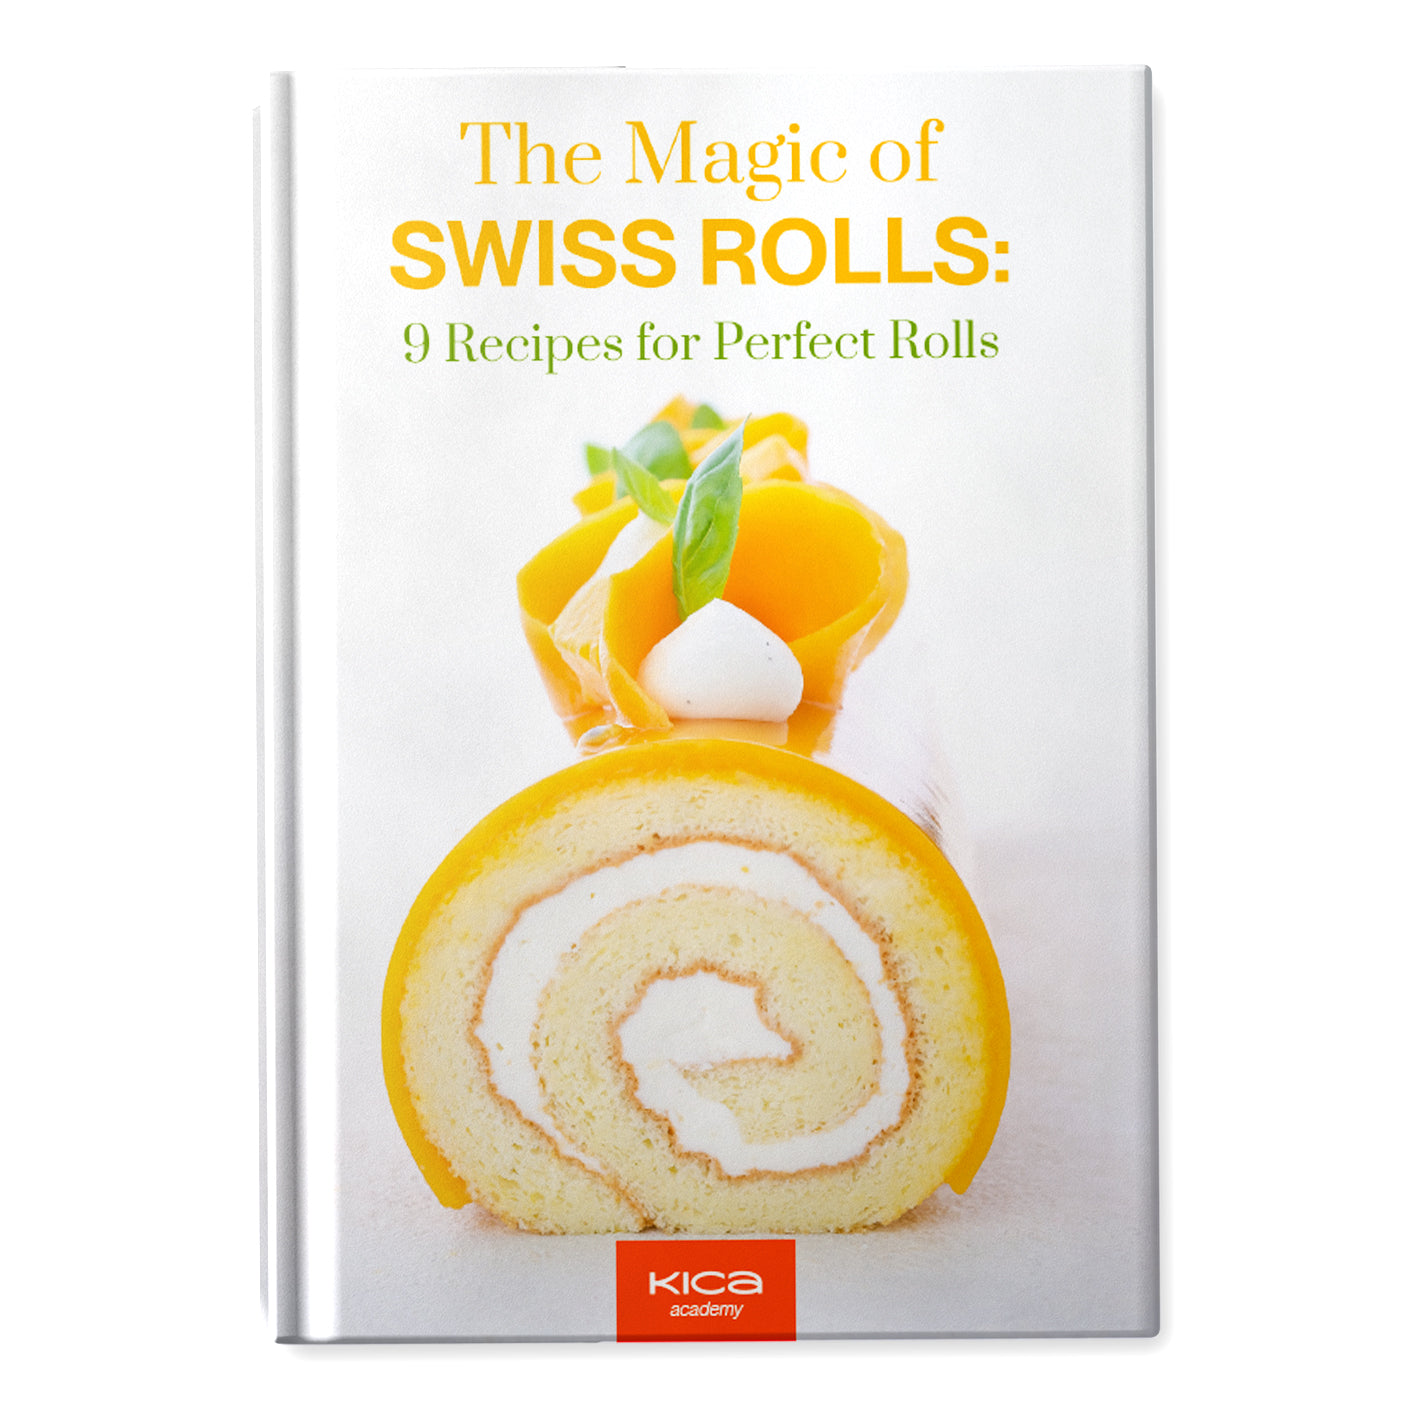 The Magic of Swiss Rolls Cookbook